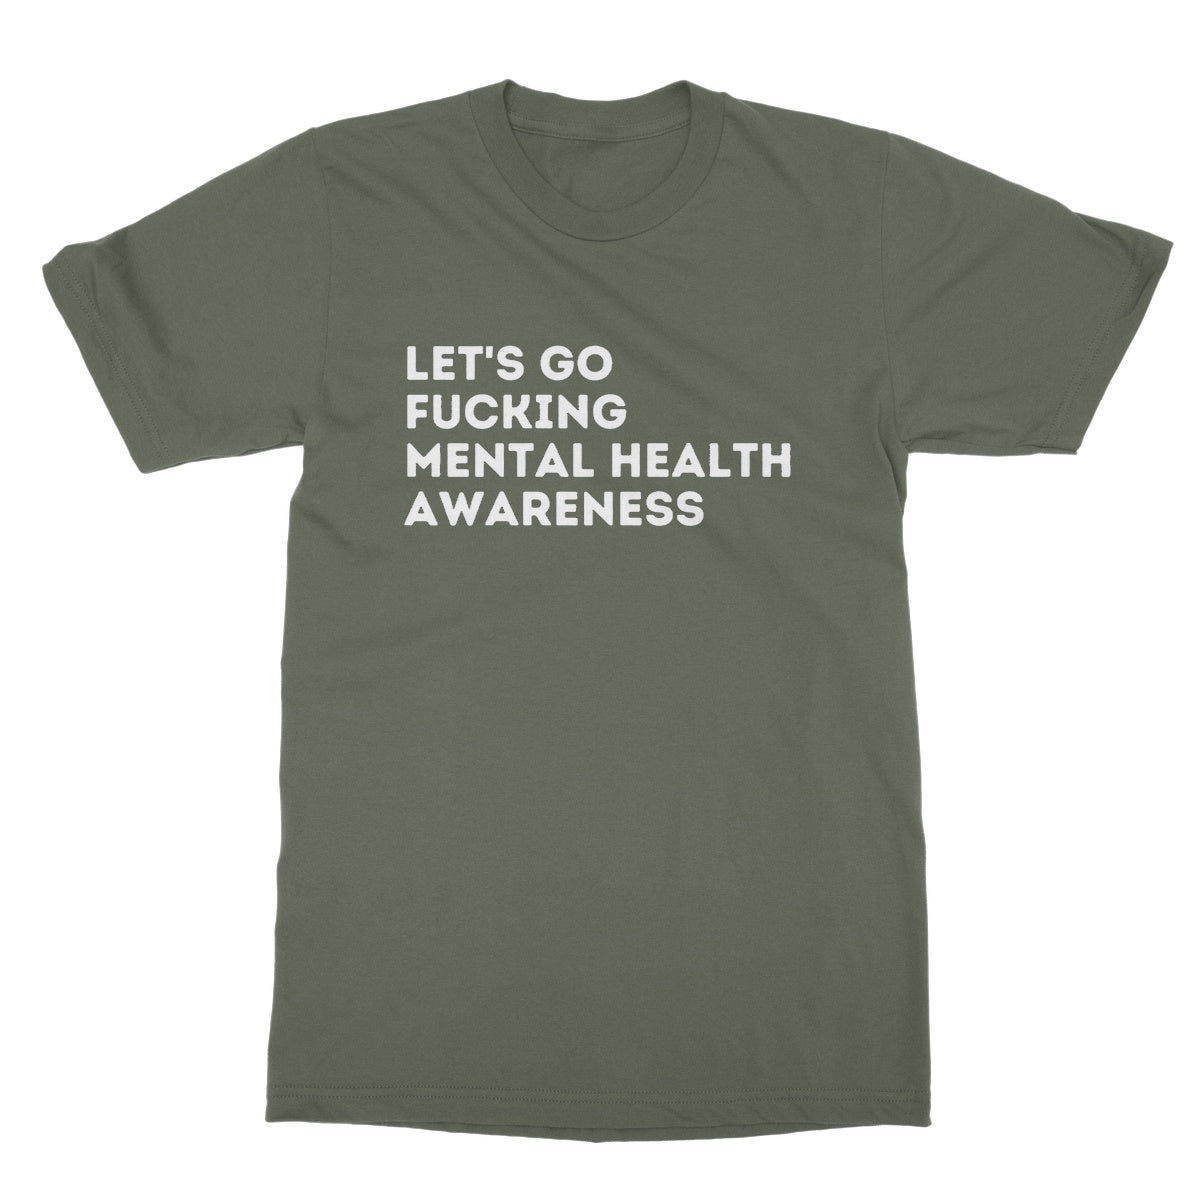 let's go fucking mental health awareness t shirt green